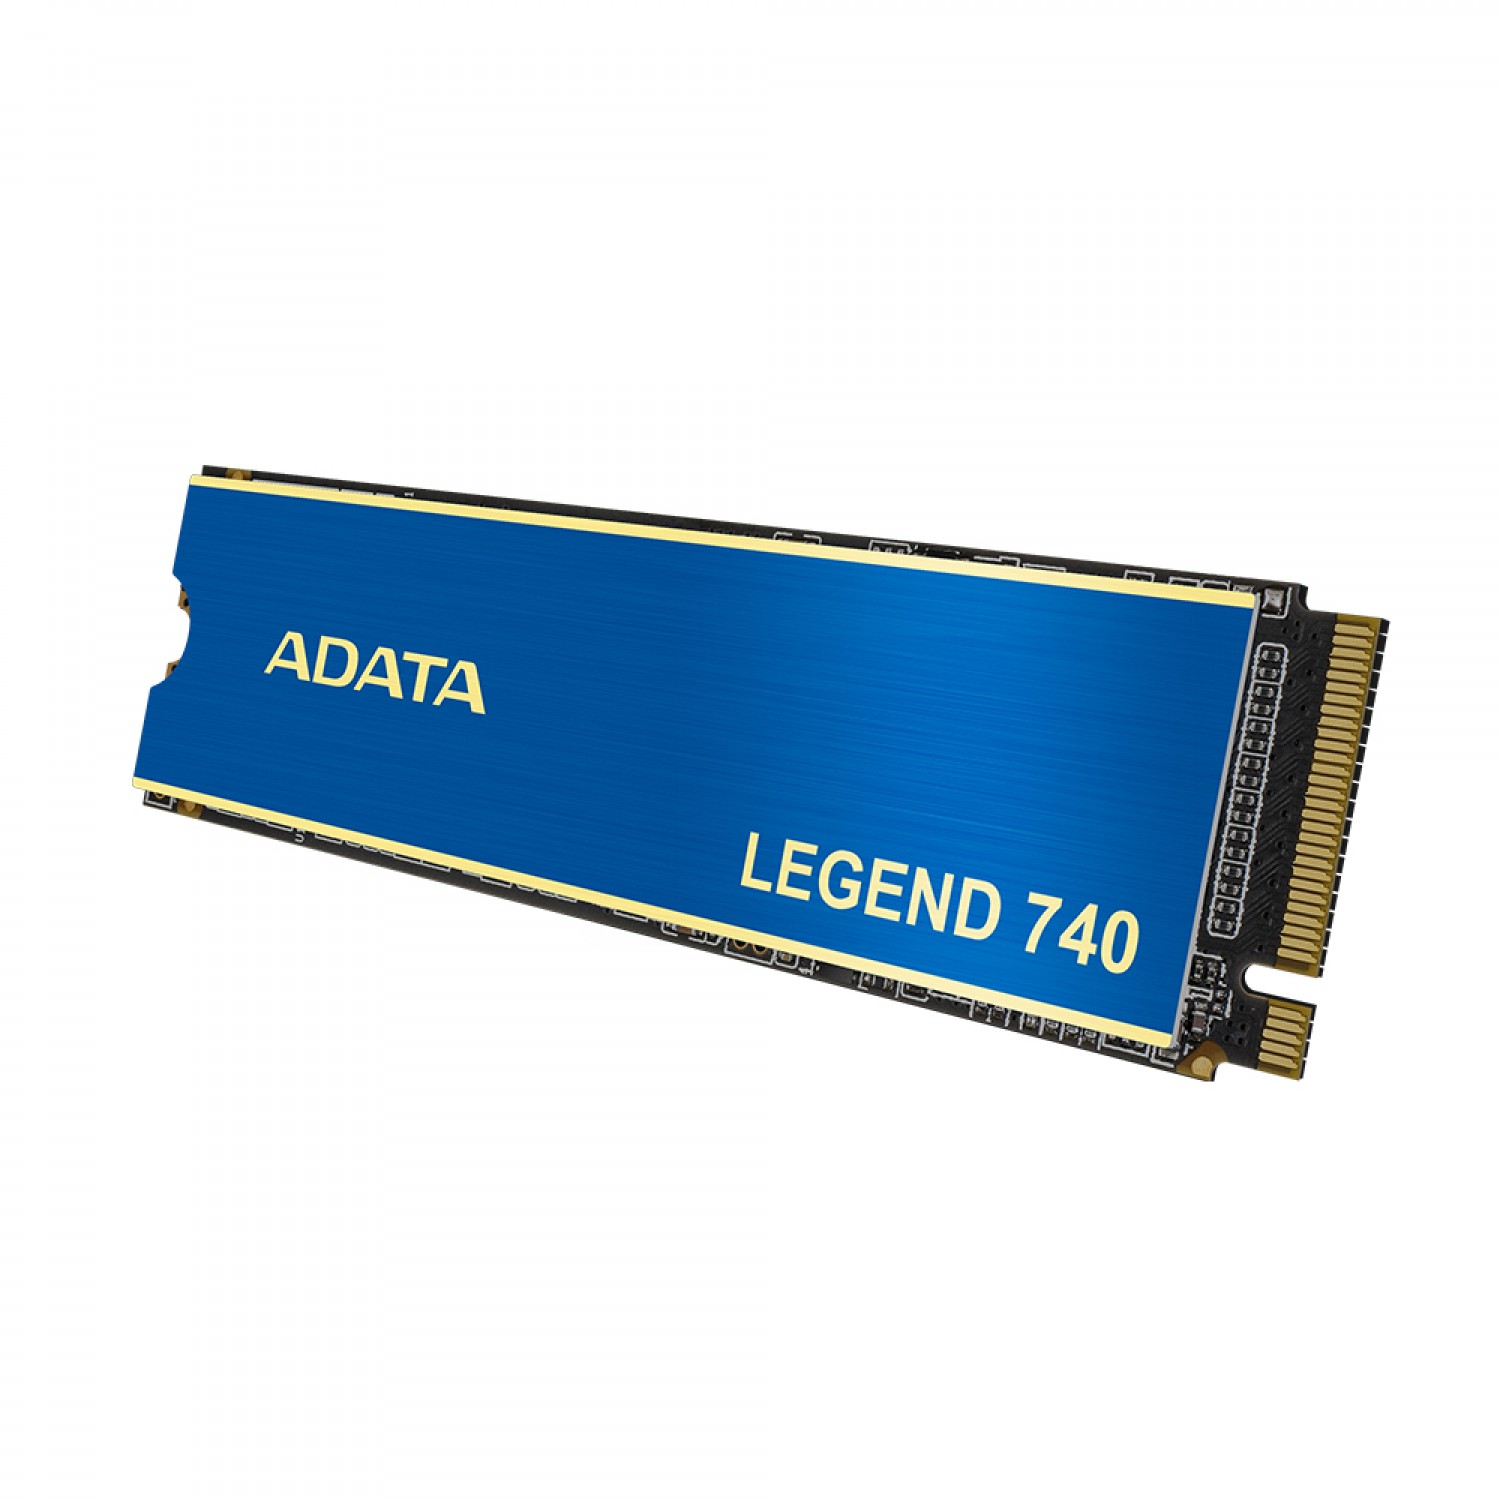 حافظه اس اس دی ADATA Legend 740 250GB-2